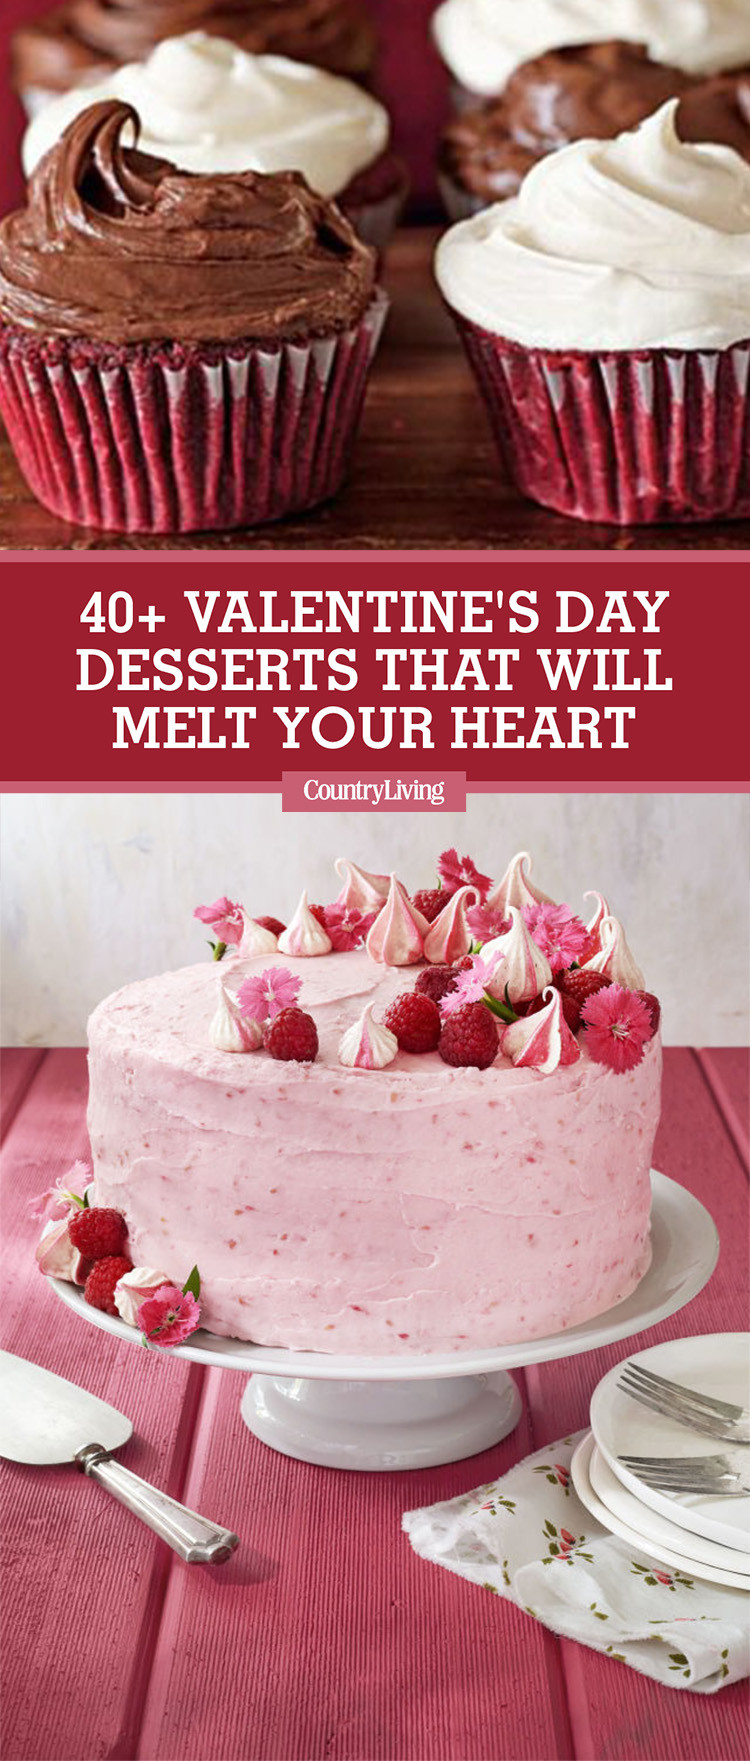 Valentine Desserts Easy
 42 Easy Valentine’s Day Desserts Best Recipes for